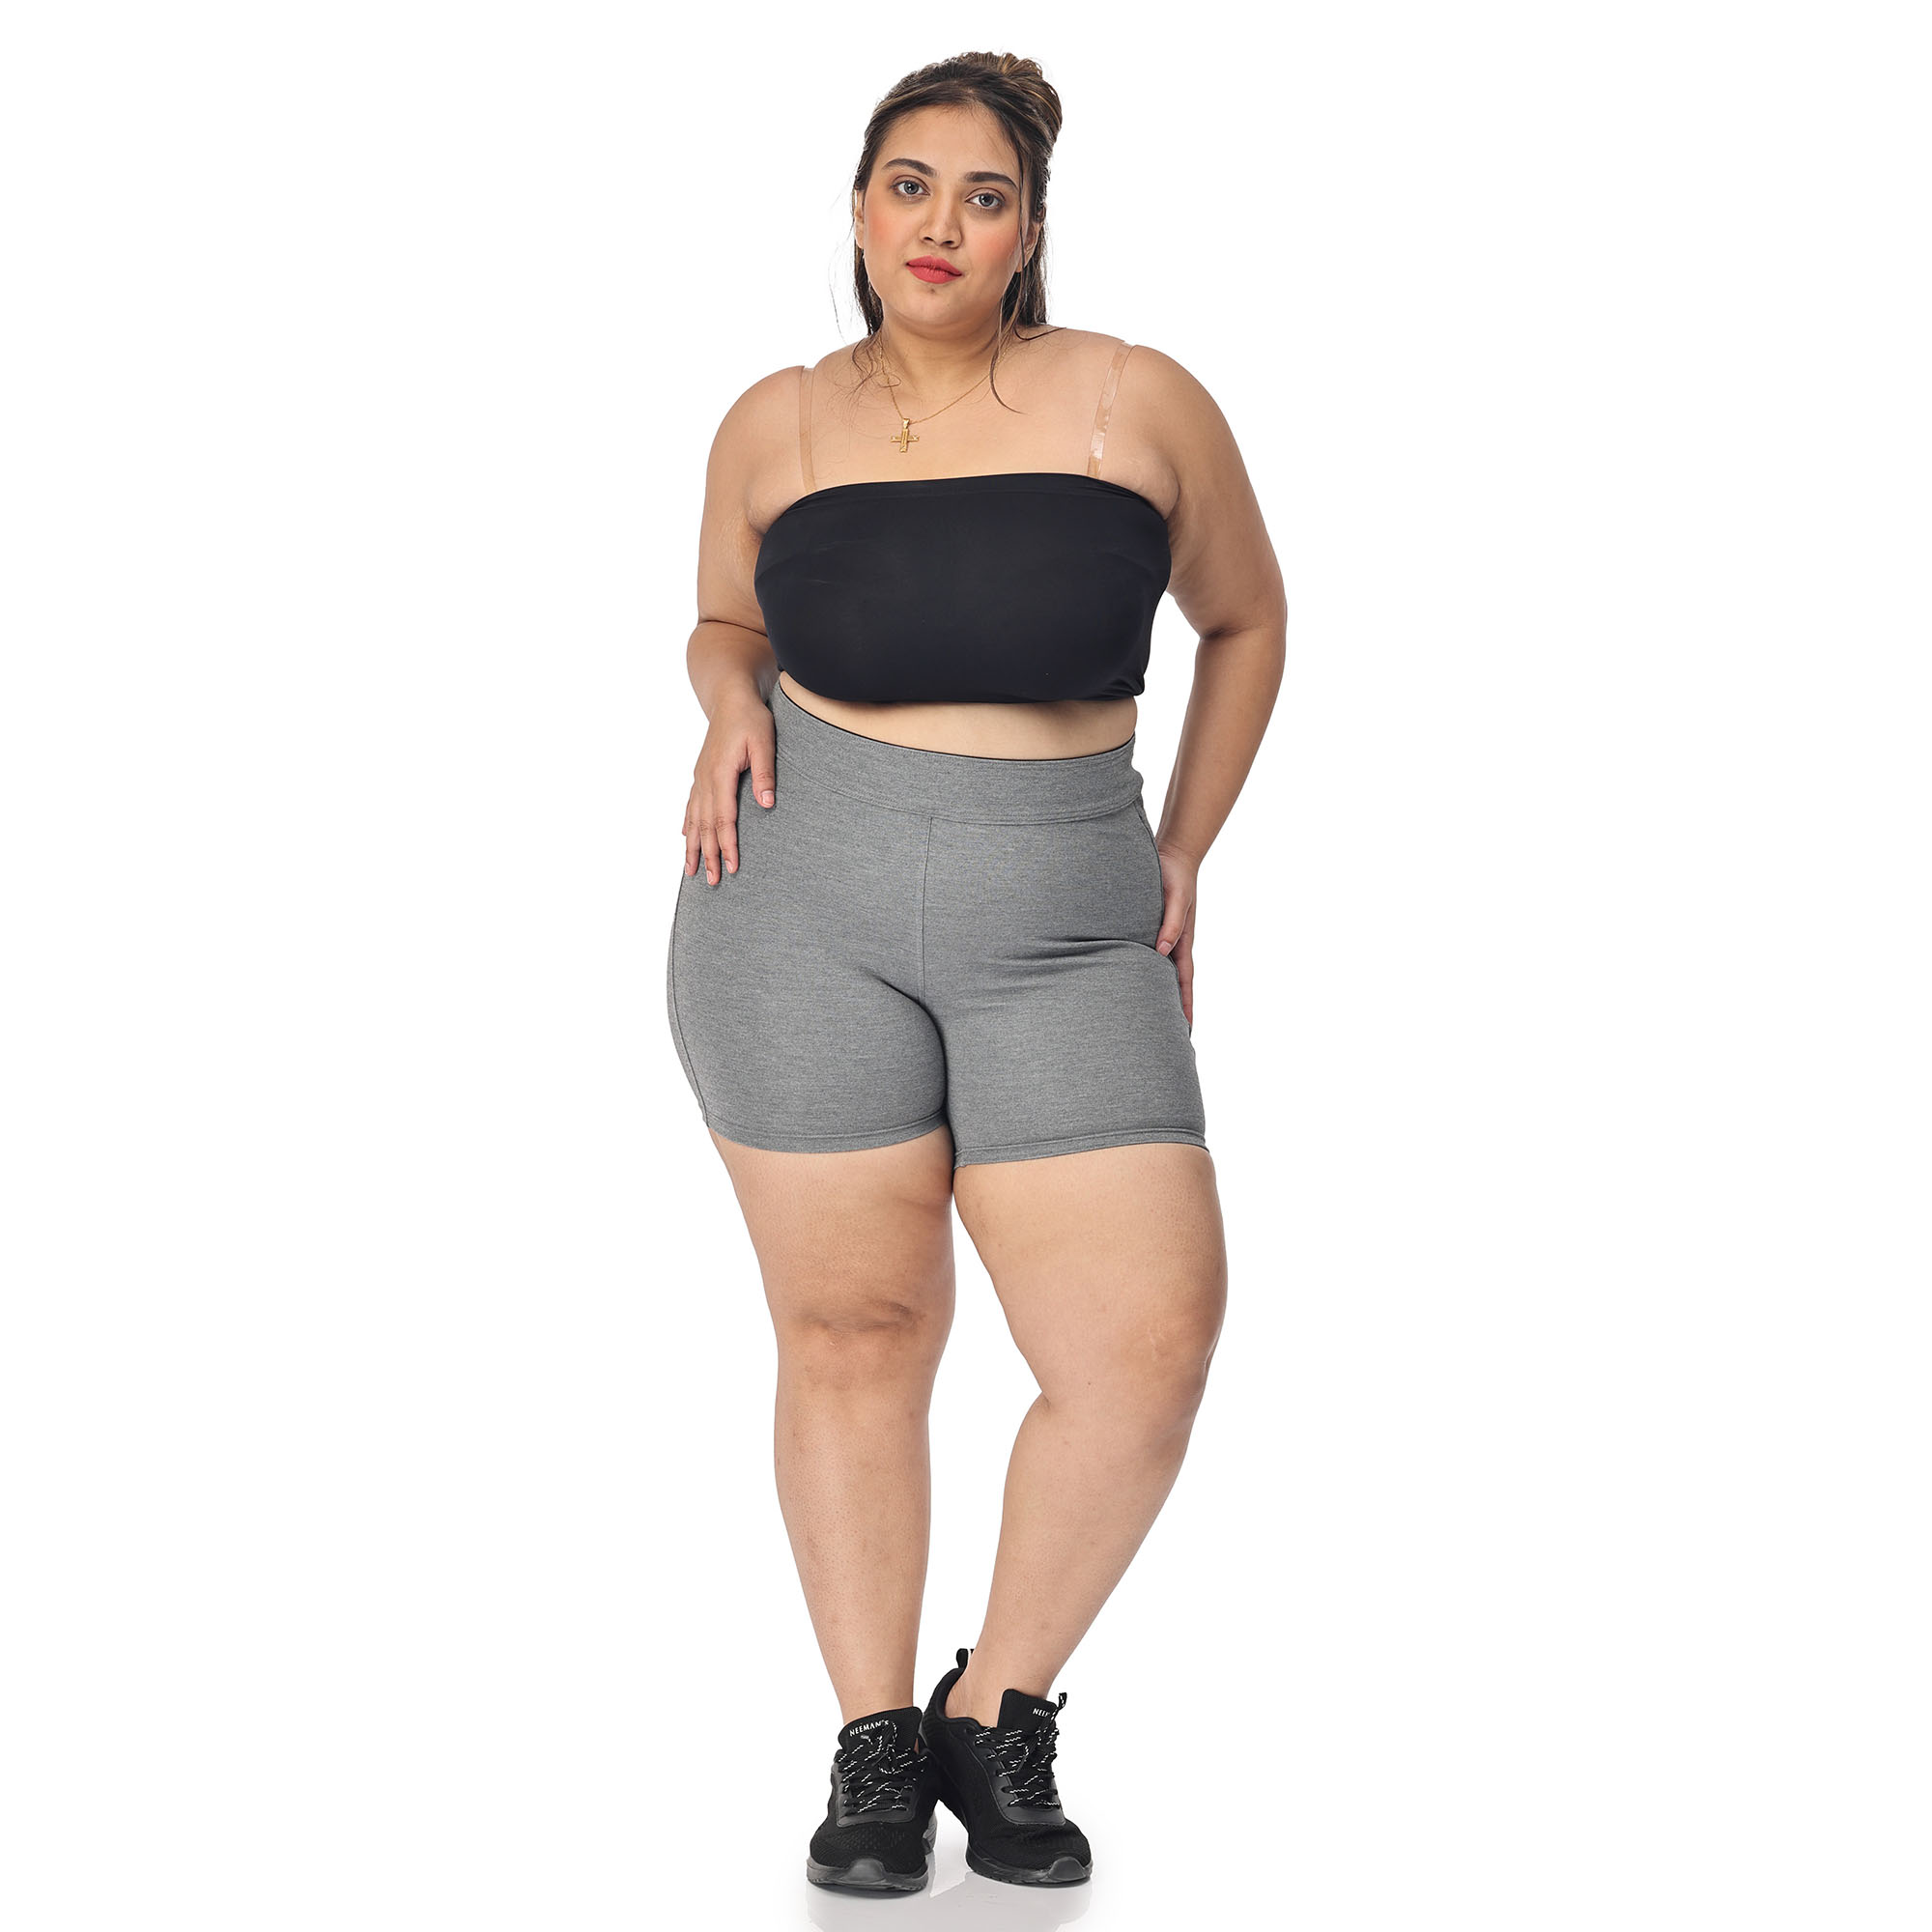 Grey shorts women - Plus size active shape wear - 2 back pockets - Belore  Slims